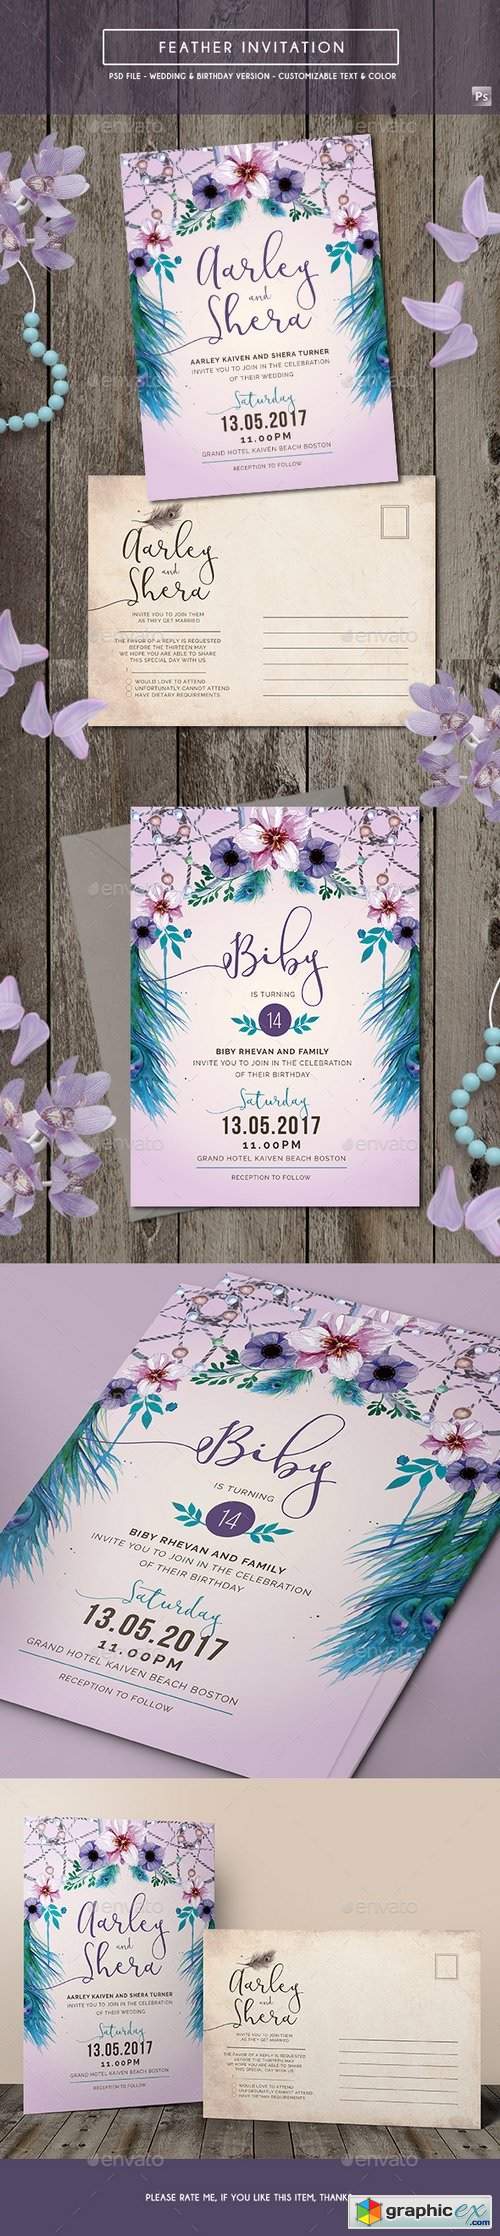 Feather Invitation (Wedding & Birthday)